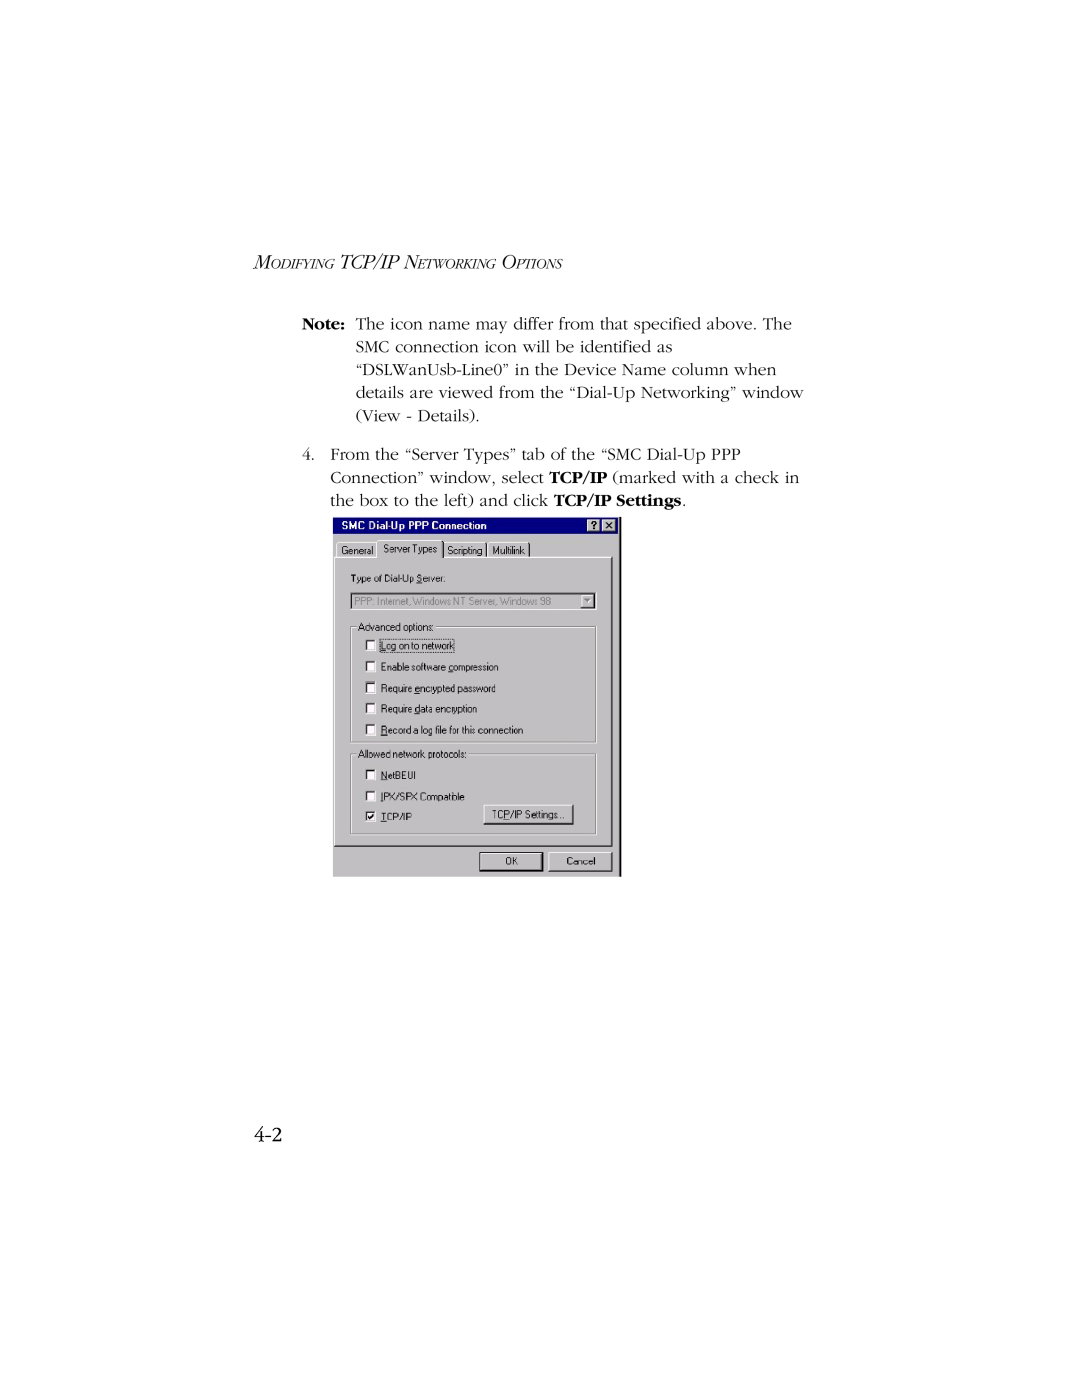 SMC Networks SMC7003-USB manual Modifying Tcp/Ip Networking Options 